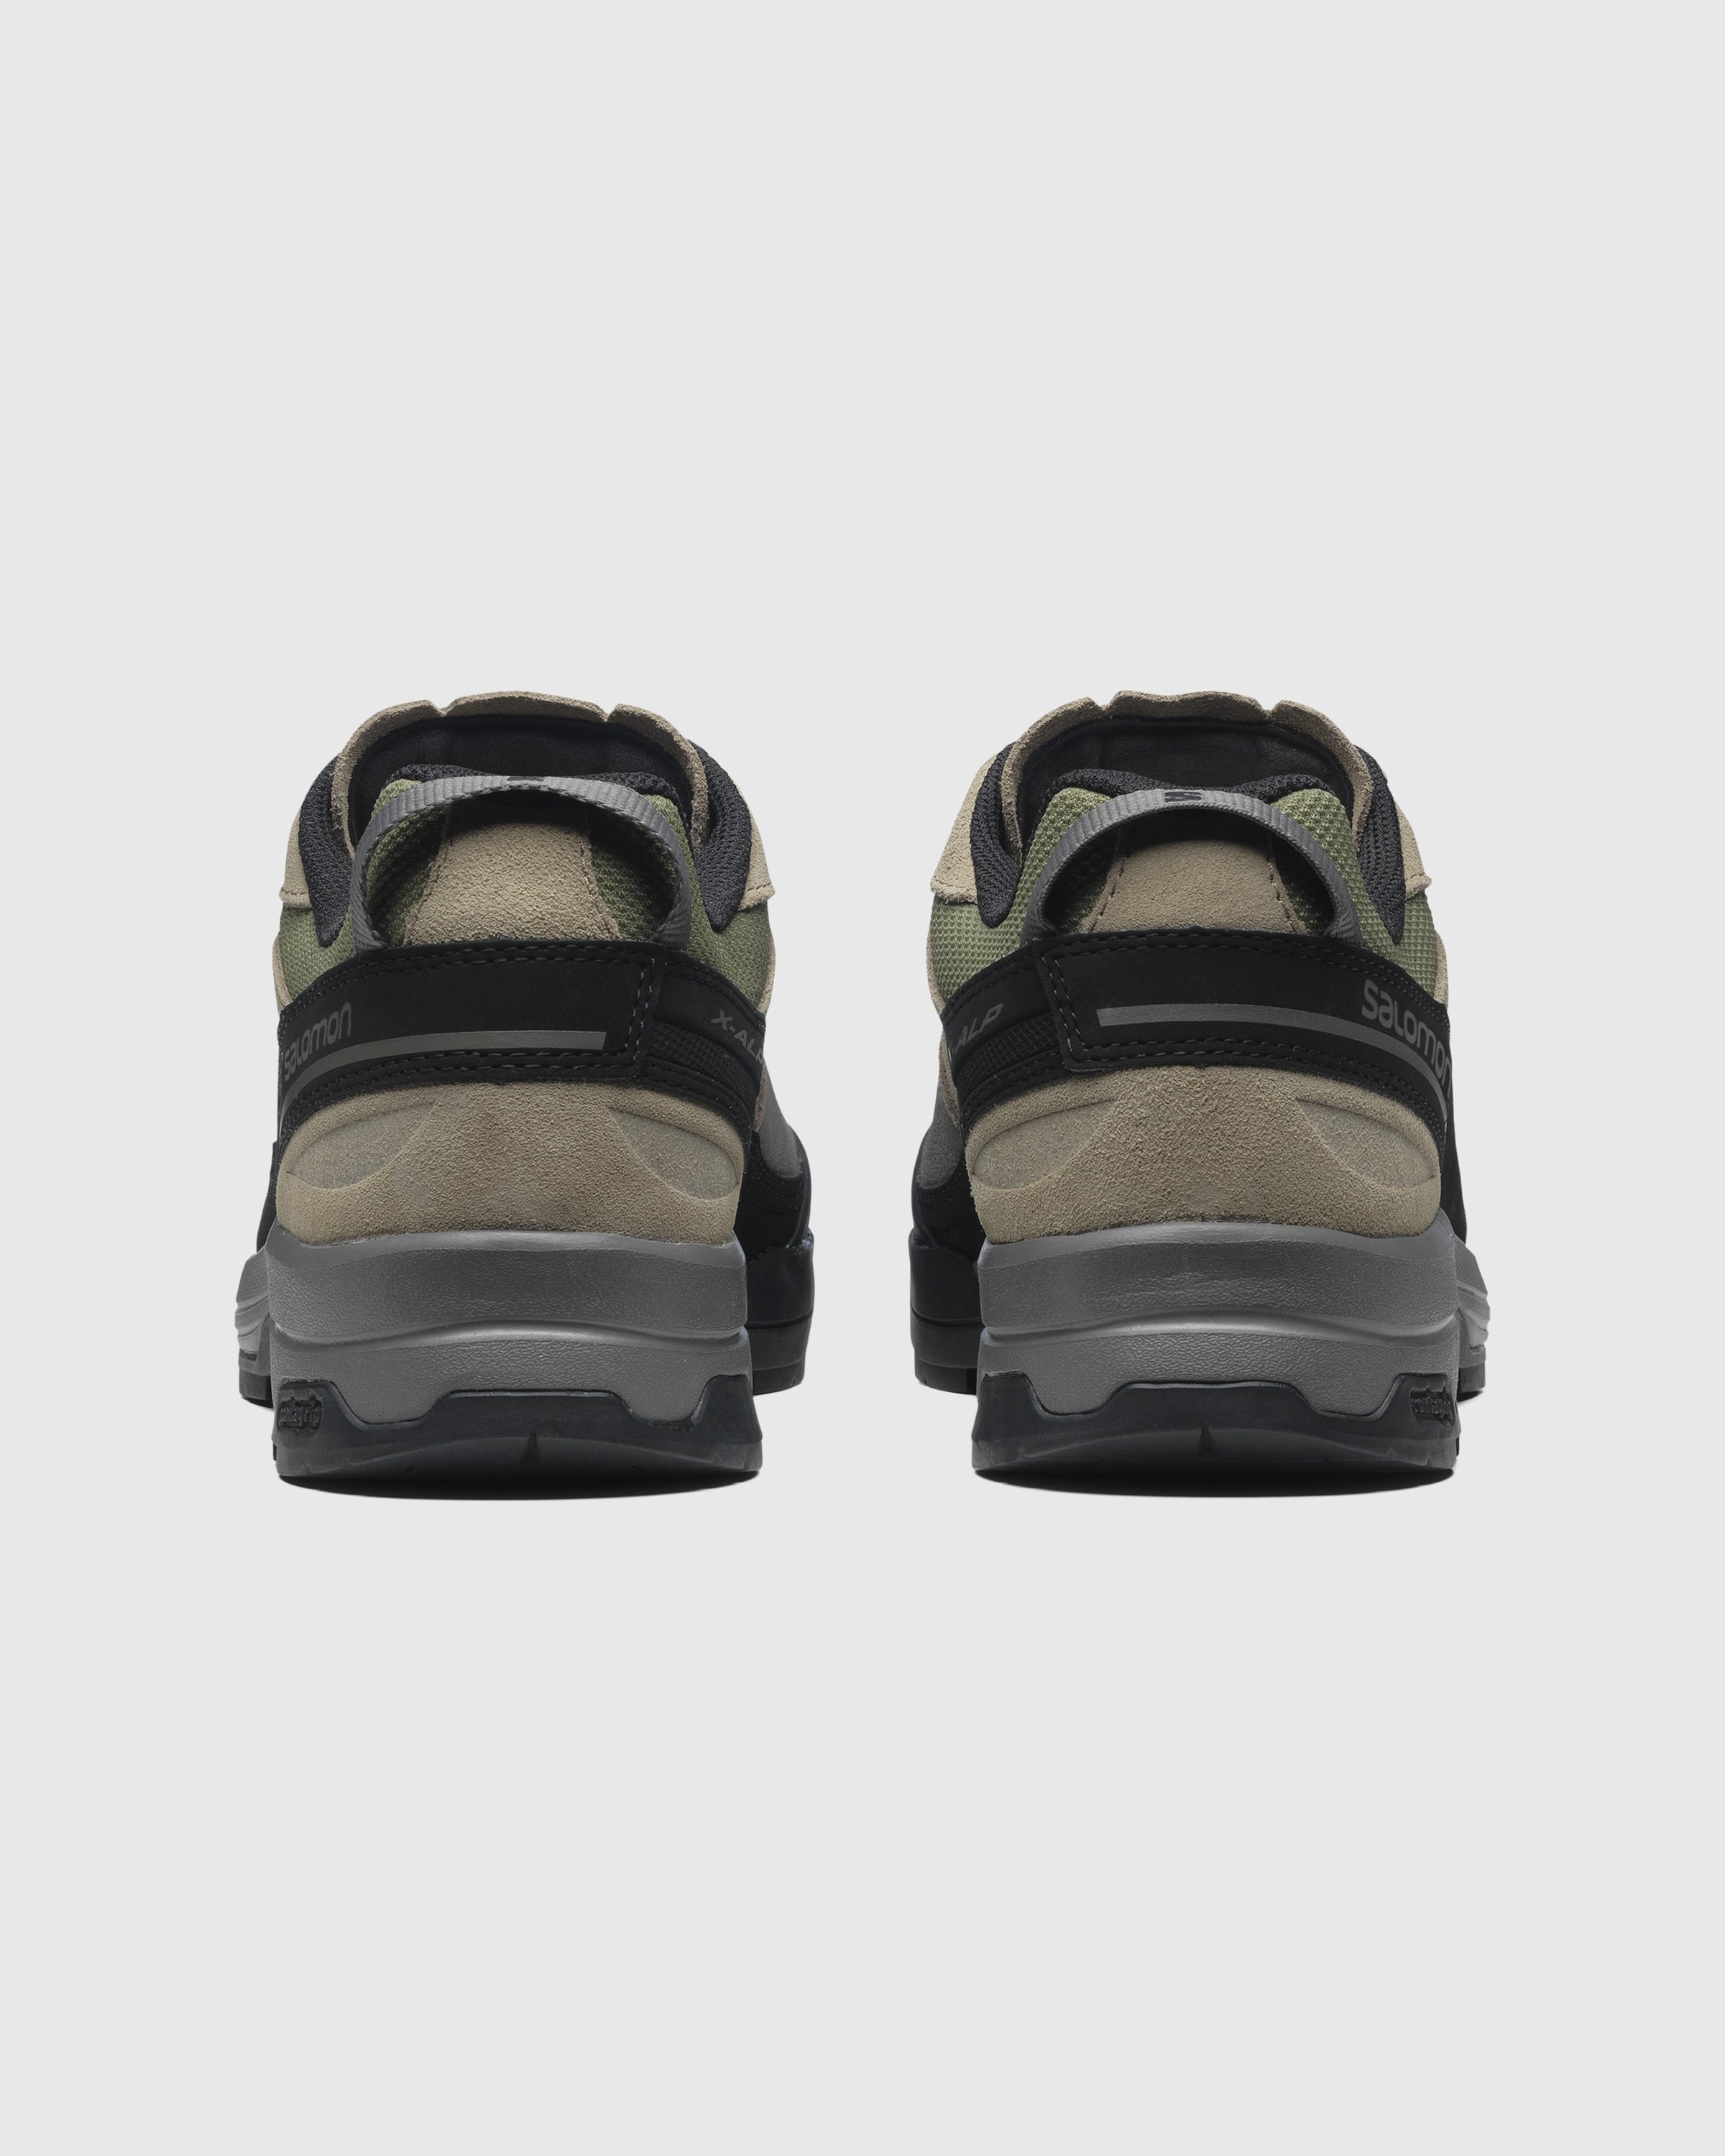 Salomon - X-ALP LTR Pewter/Vinkha/Black - Footwear - Multi - Image 3